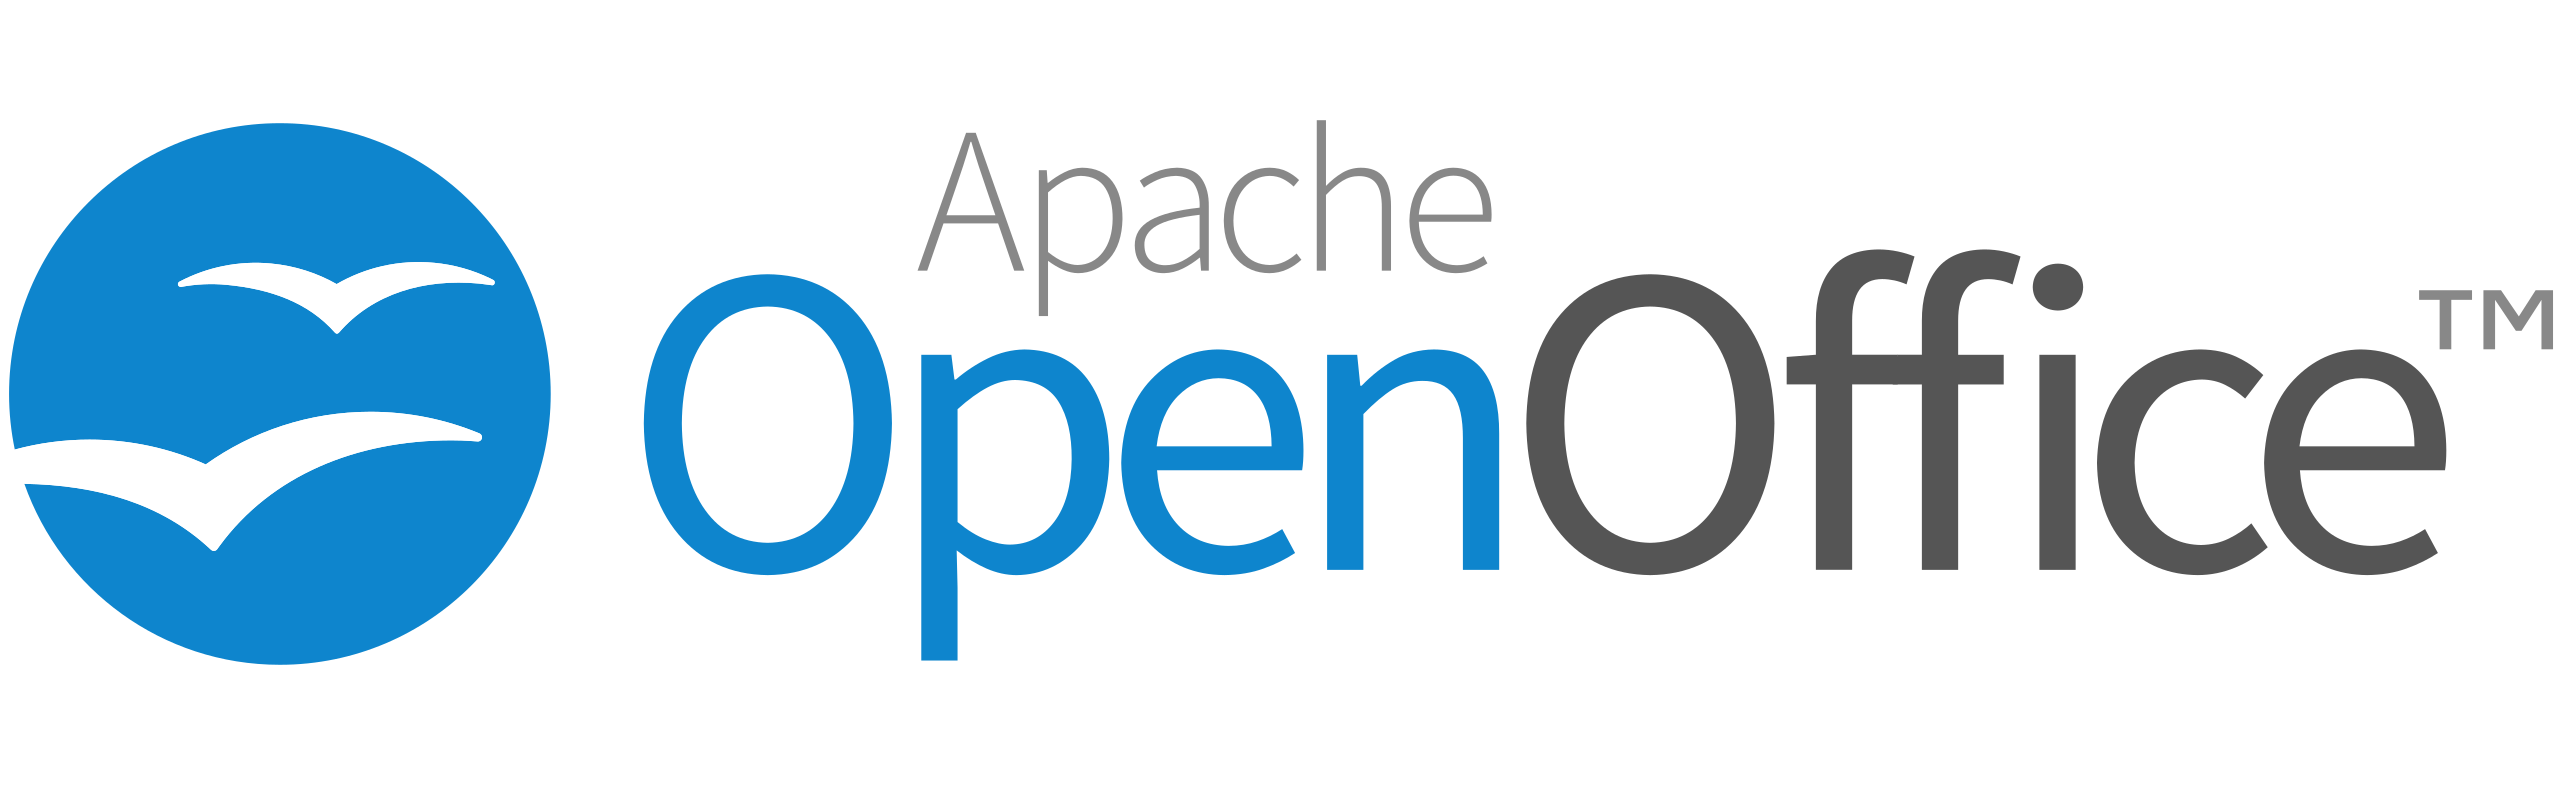 File:Apache OpenOffice logo and wordmark (2014).svg - Wikipedia